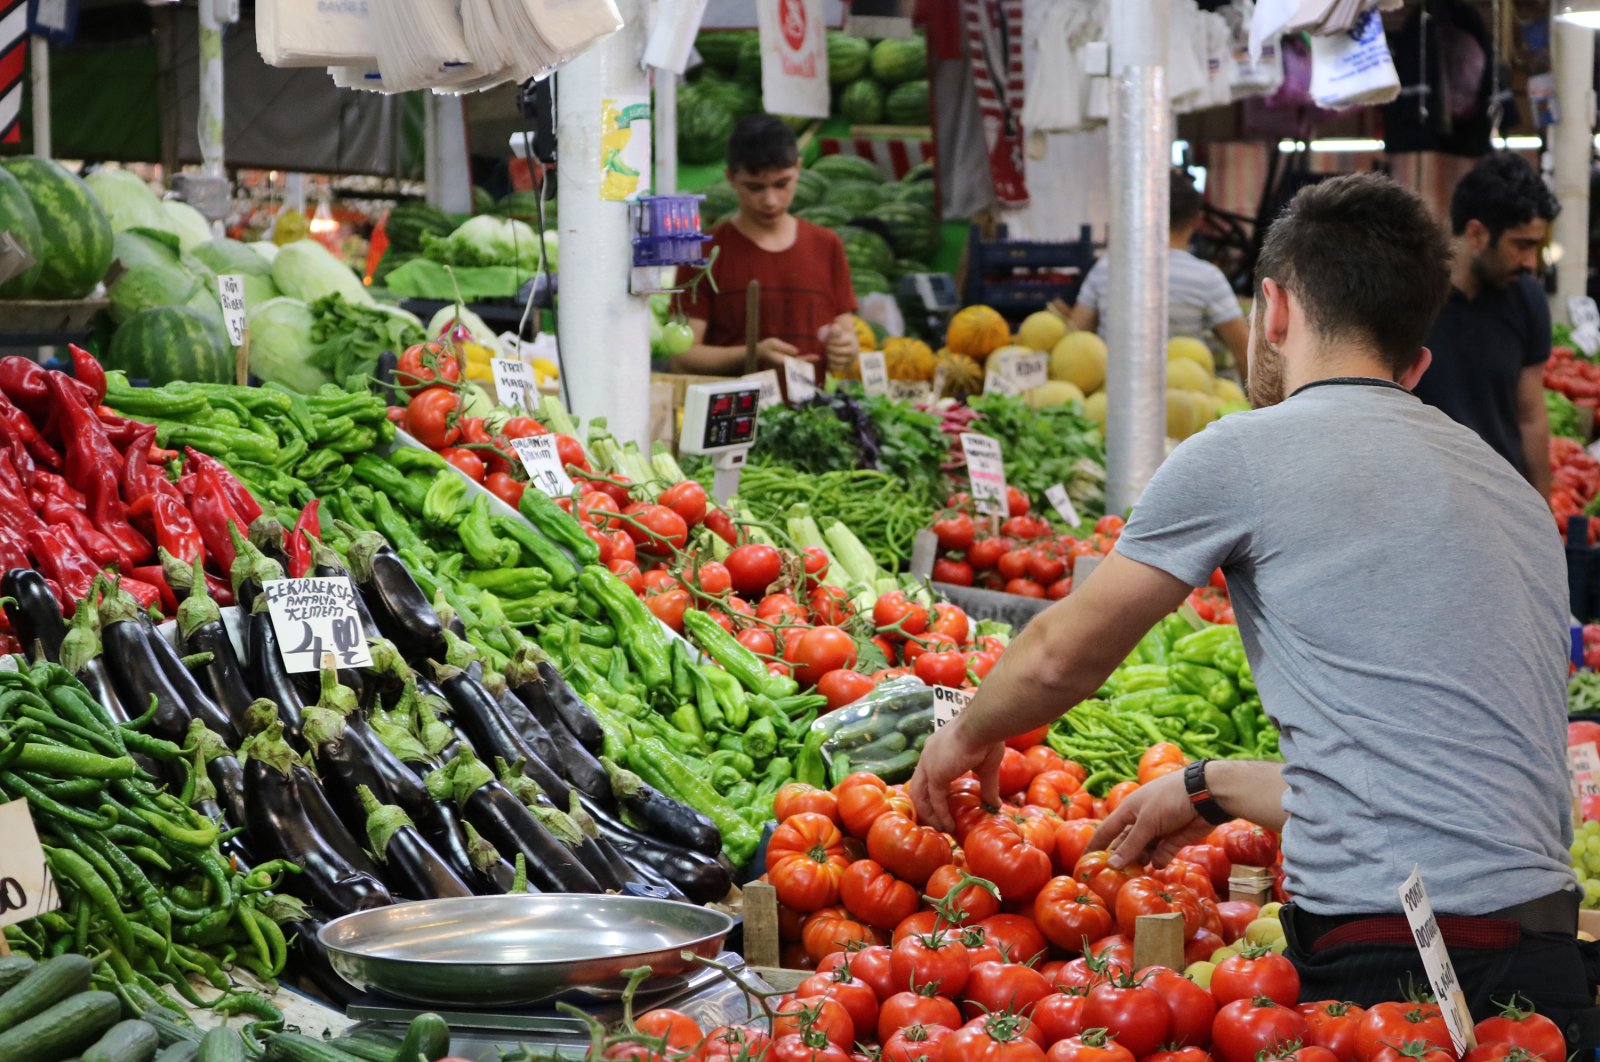 A seller arranges his produce at a bazaar in Turkey's Sivas, July 4, 2019. (Shutterstock Photo)